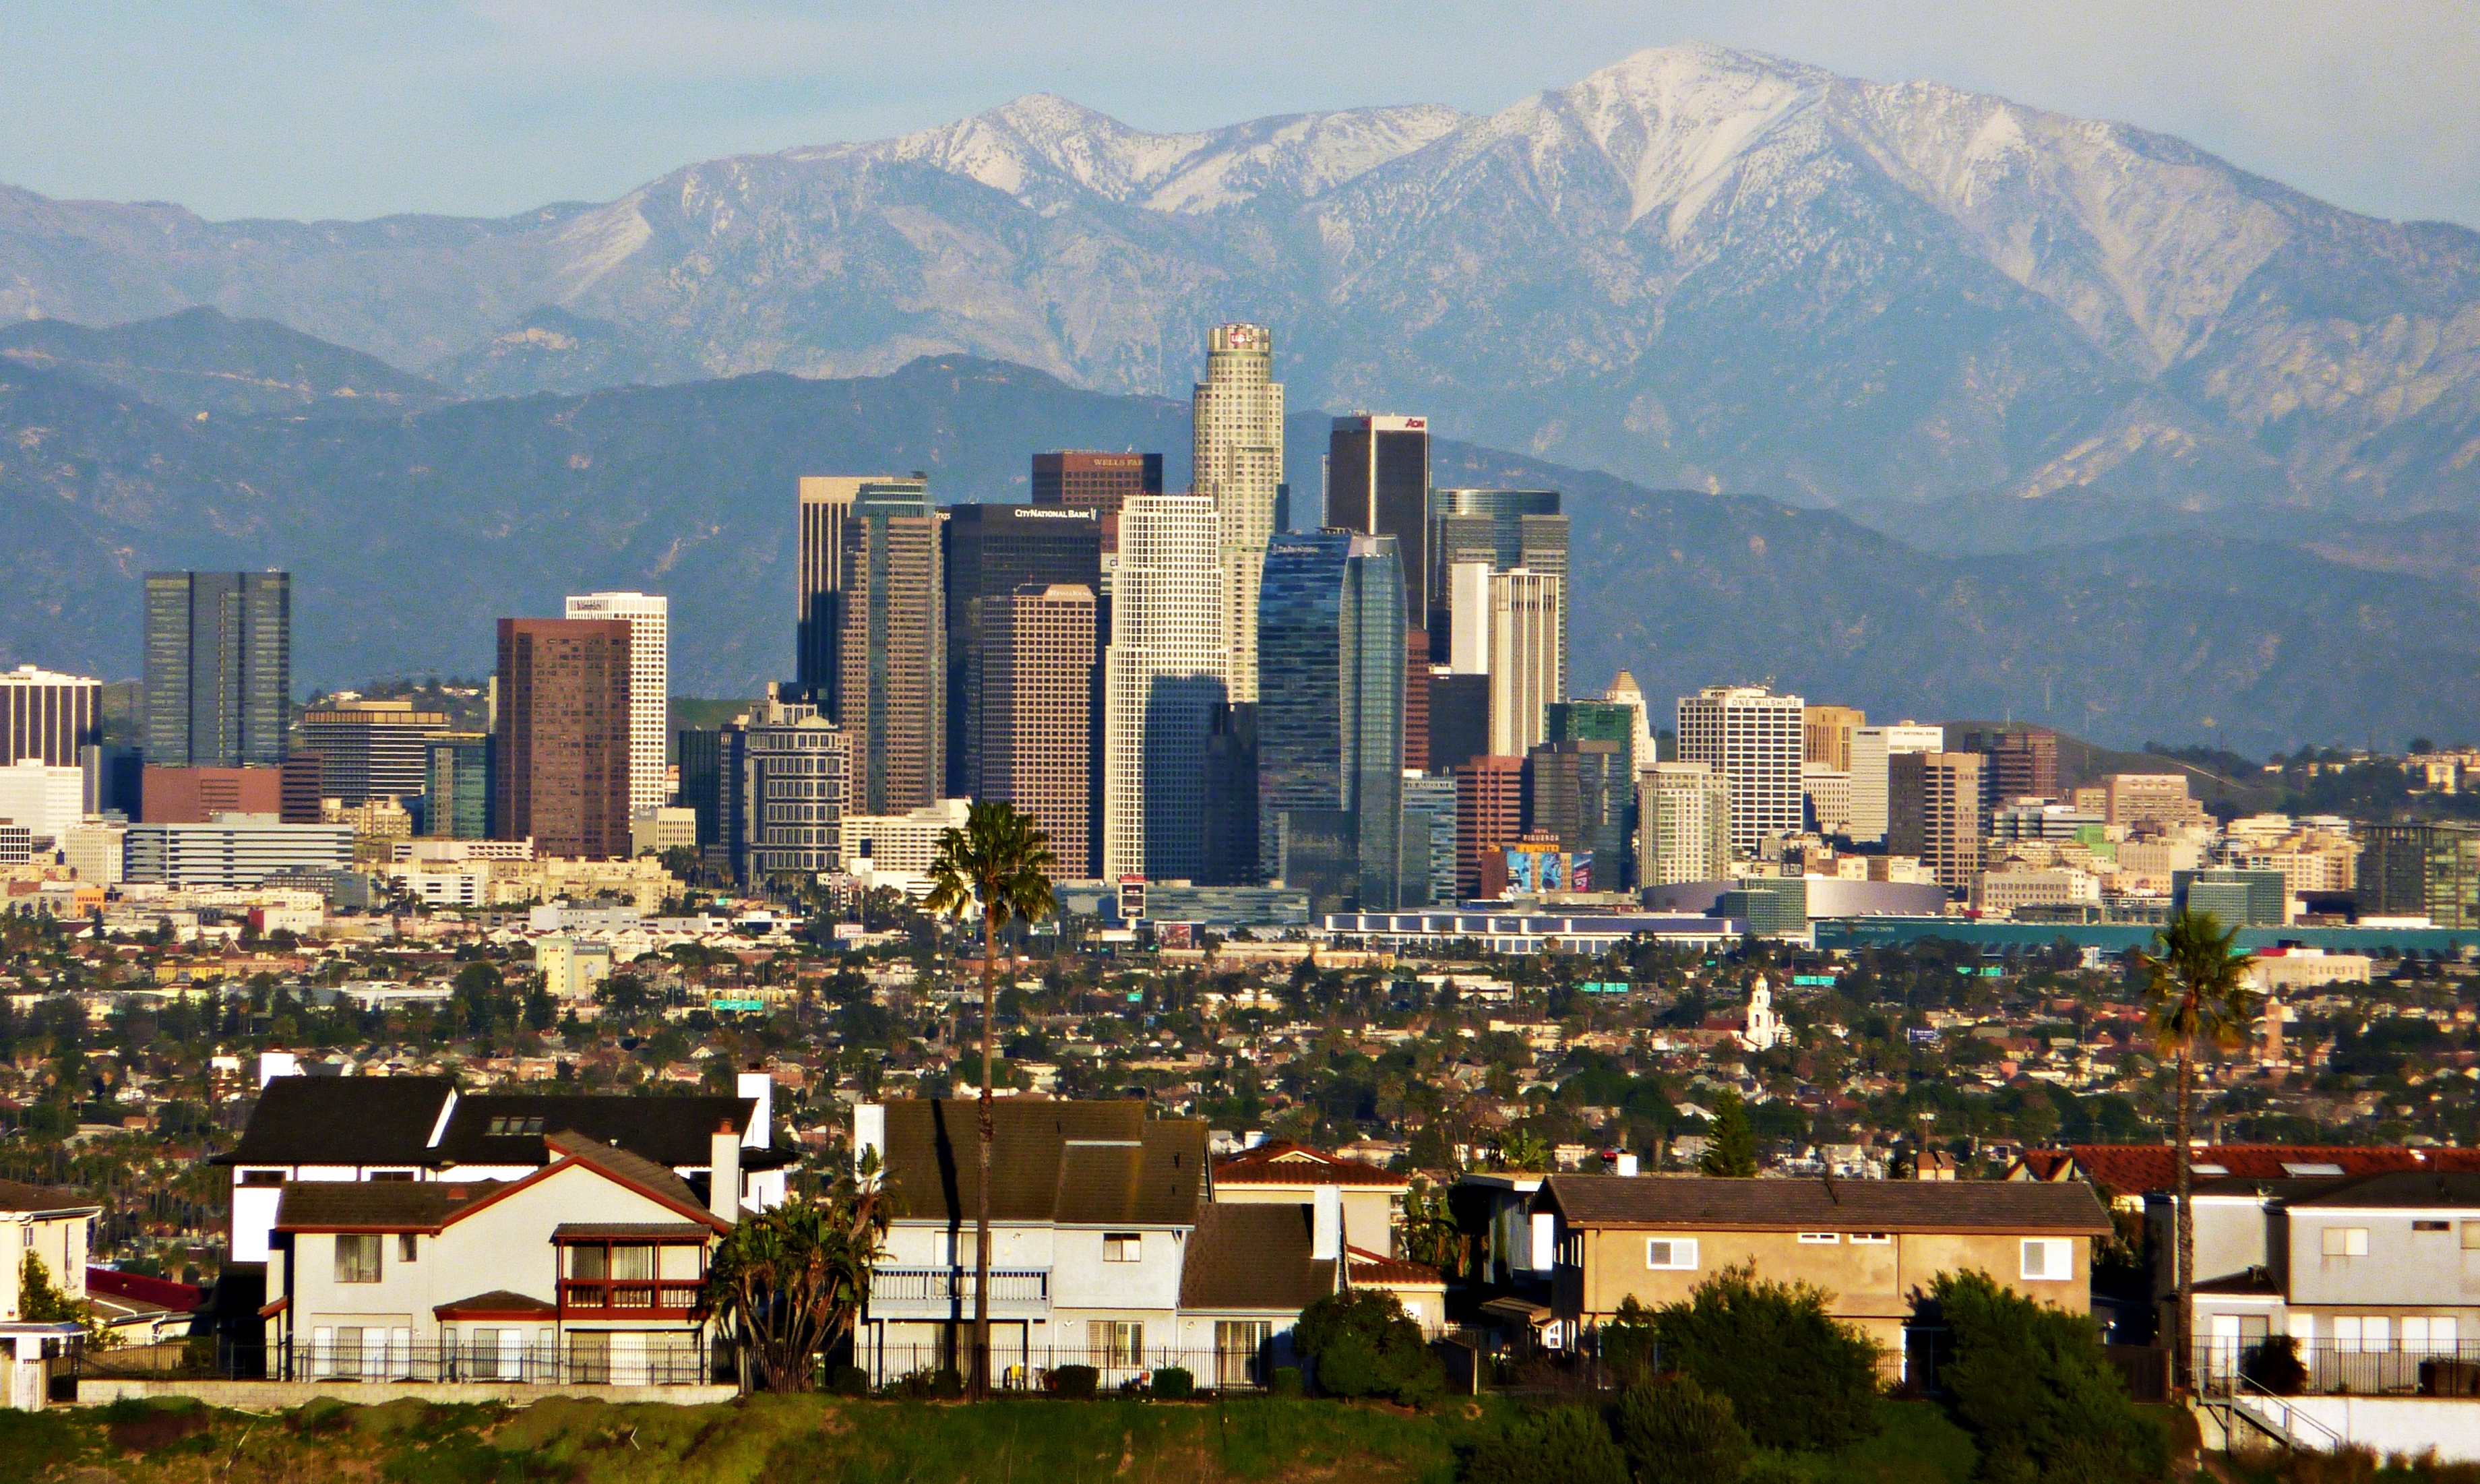 https://upload.wikimedia.org/wikipedia/commons/8/84/Los_Angeles_Skyline_telephoto.jpg